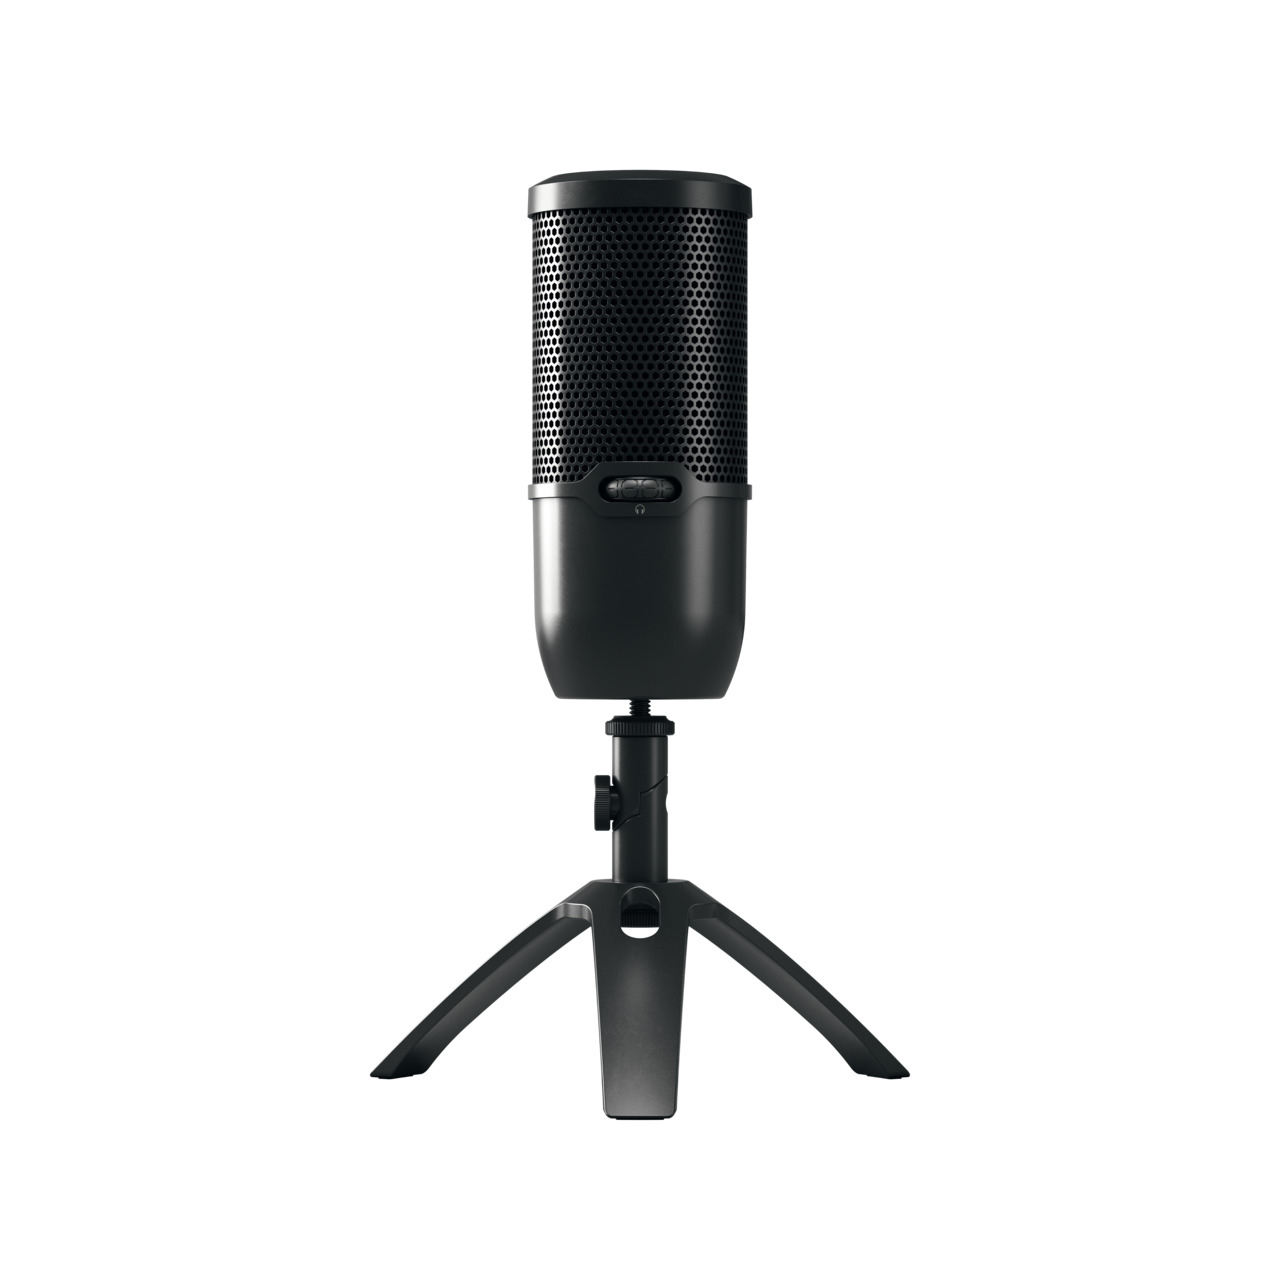 CHERRY UM 3.0 Microphone - Black